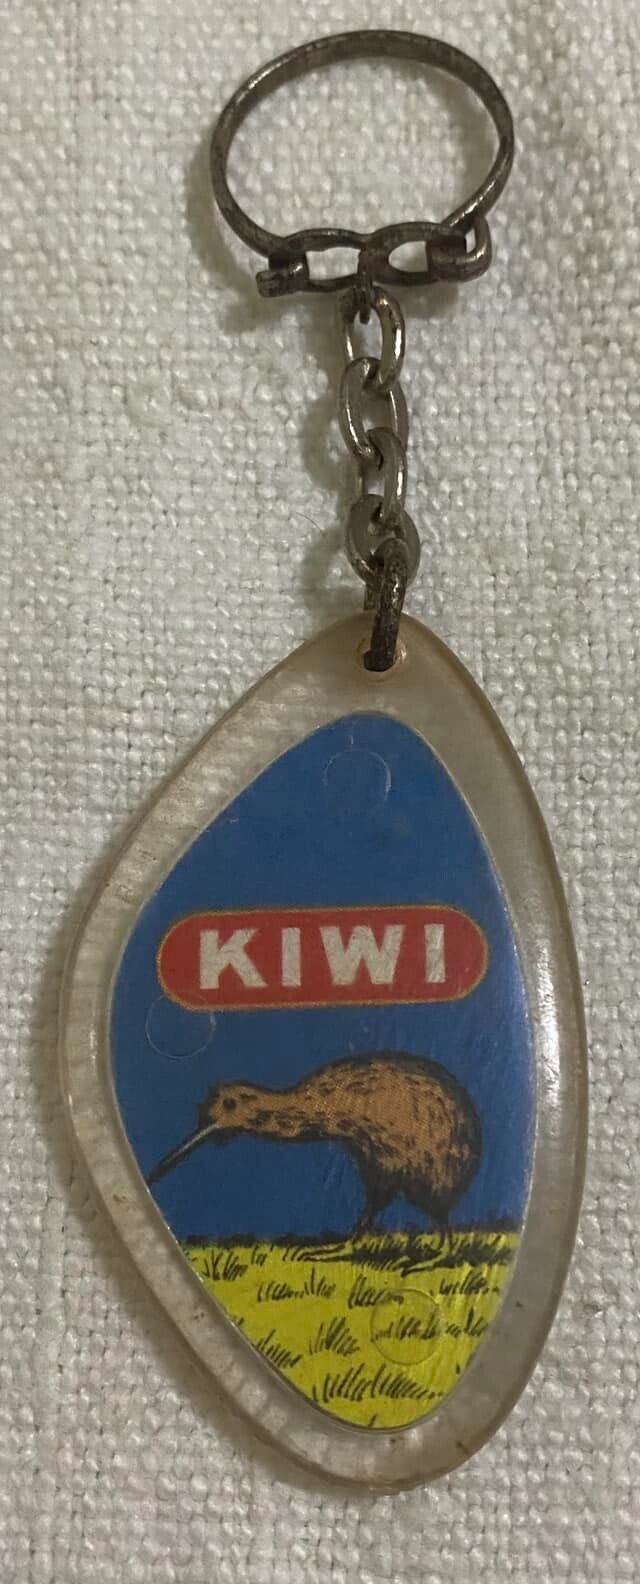 Vintage KIWI military Boot polish keychain keyring